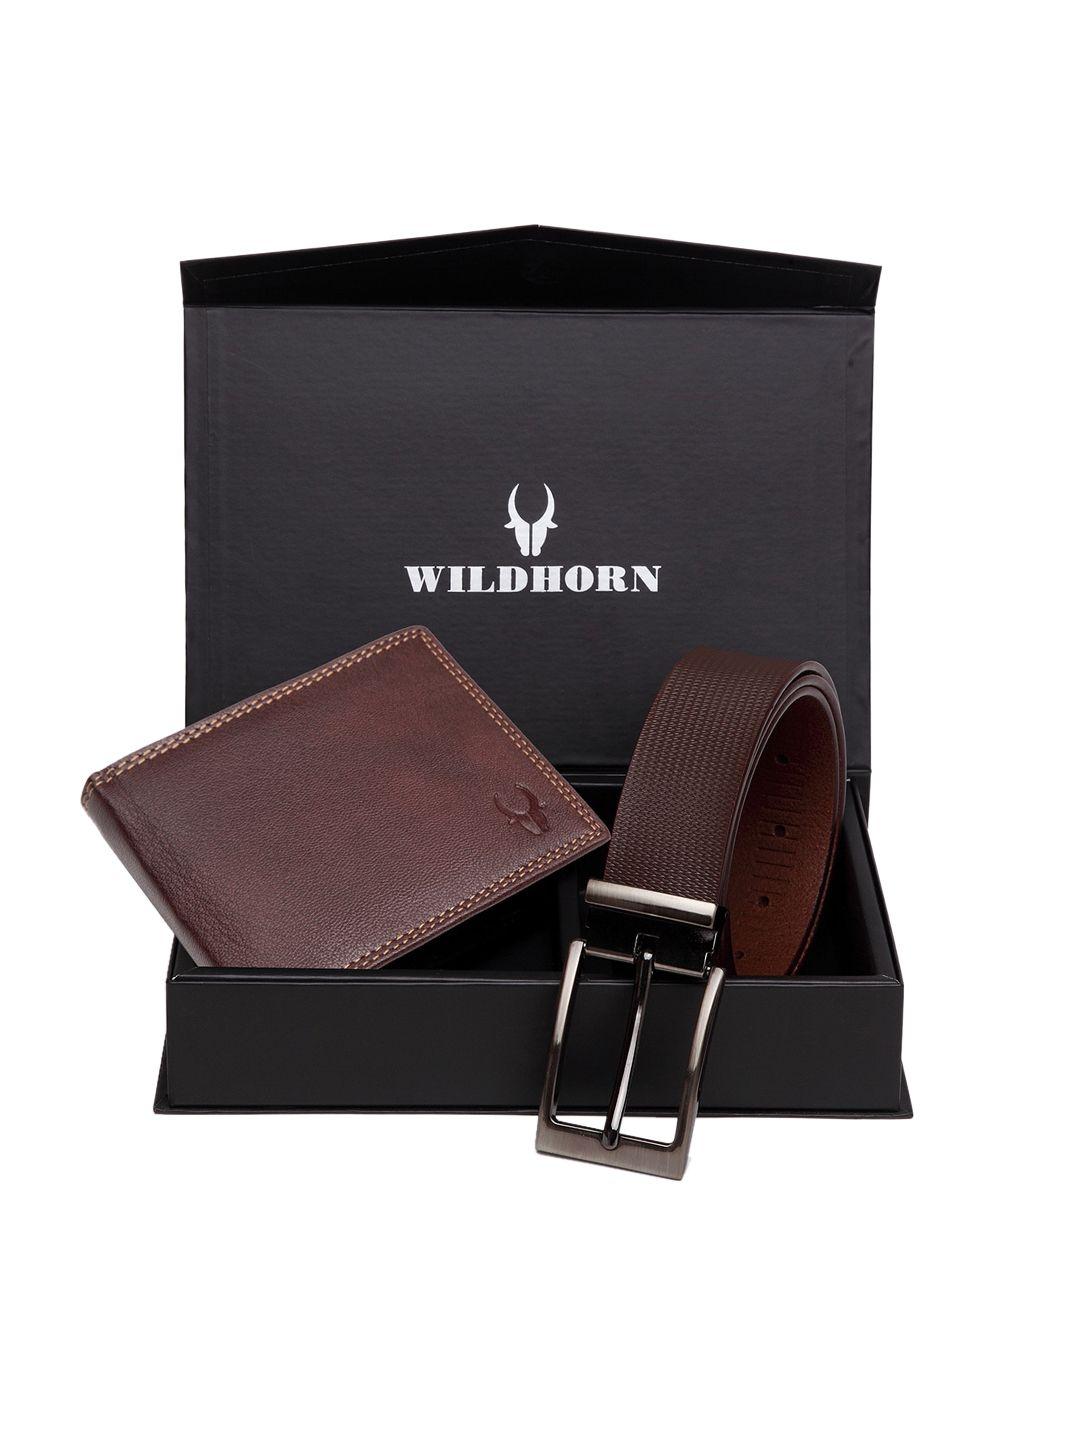 wildhorn men maroon & brown rfid protected genuine leather accessory gift set